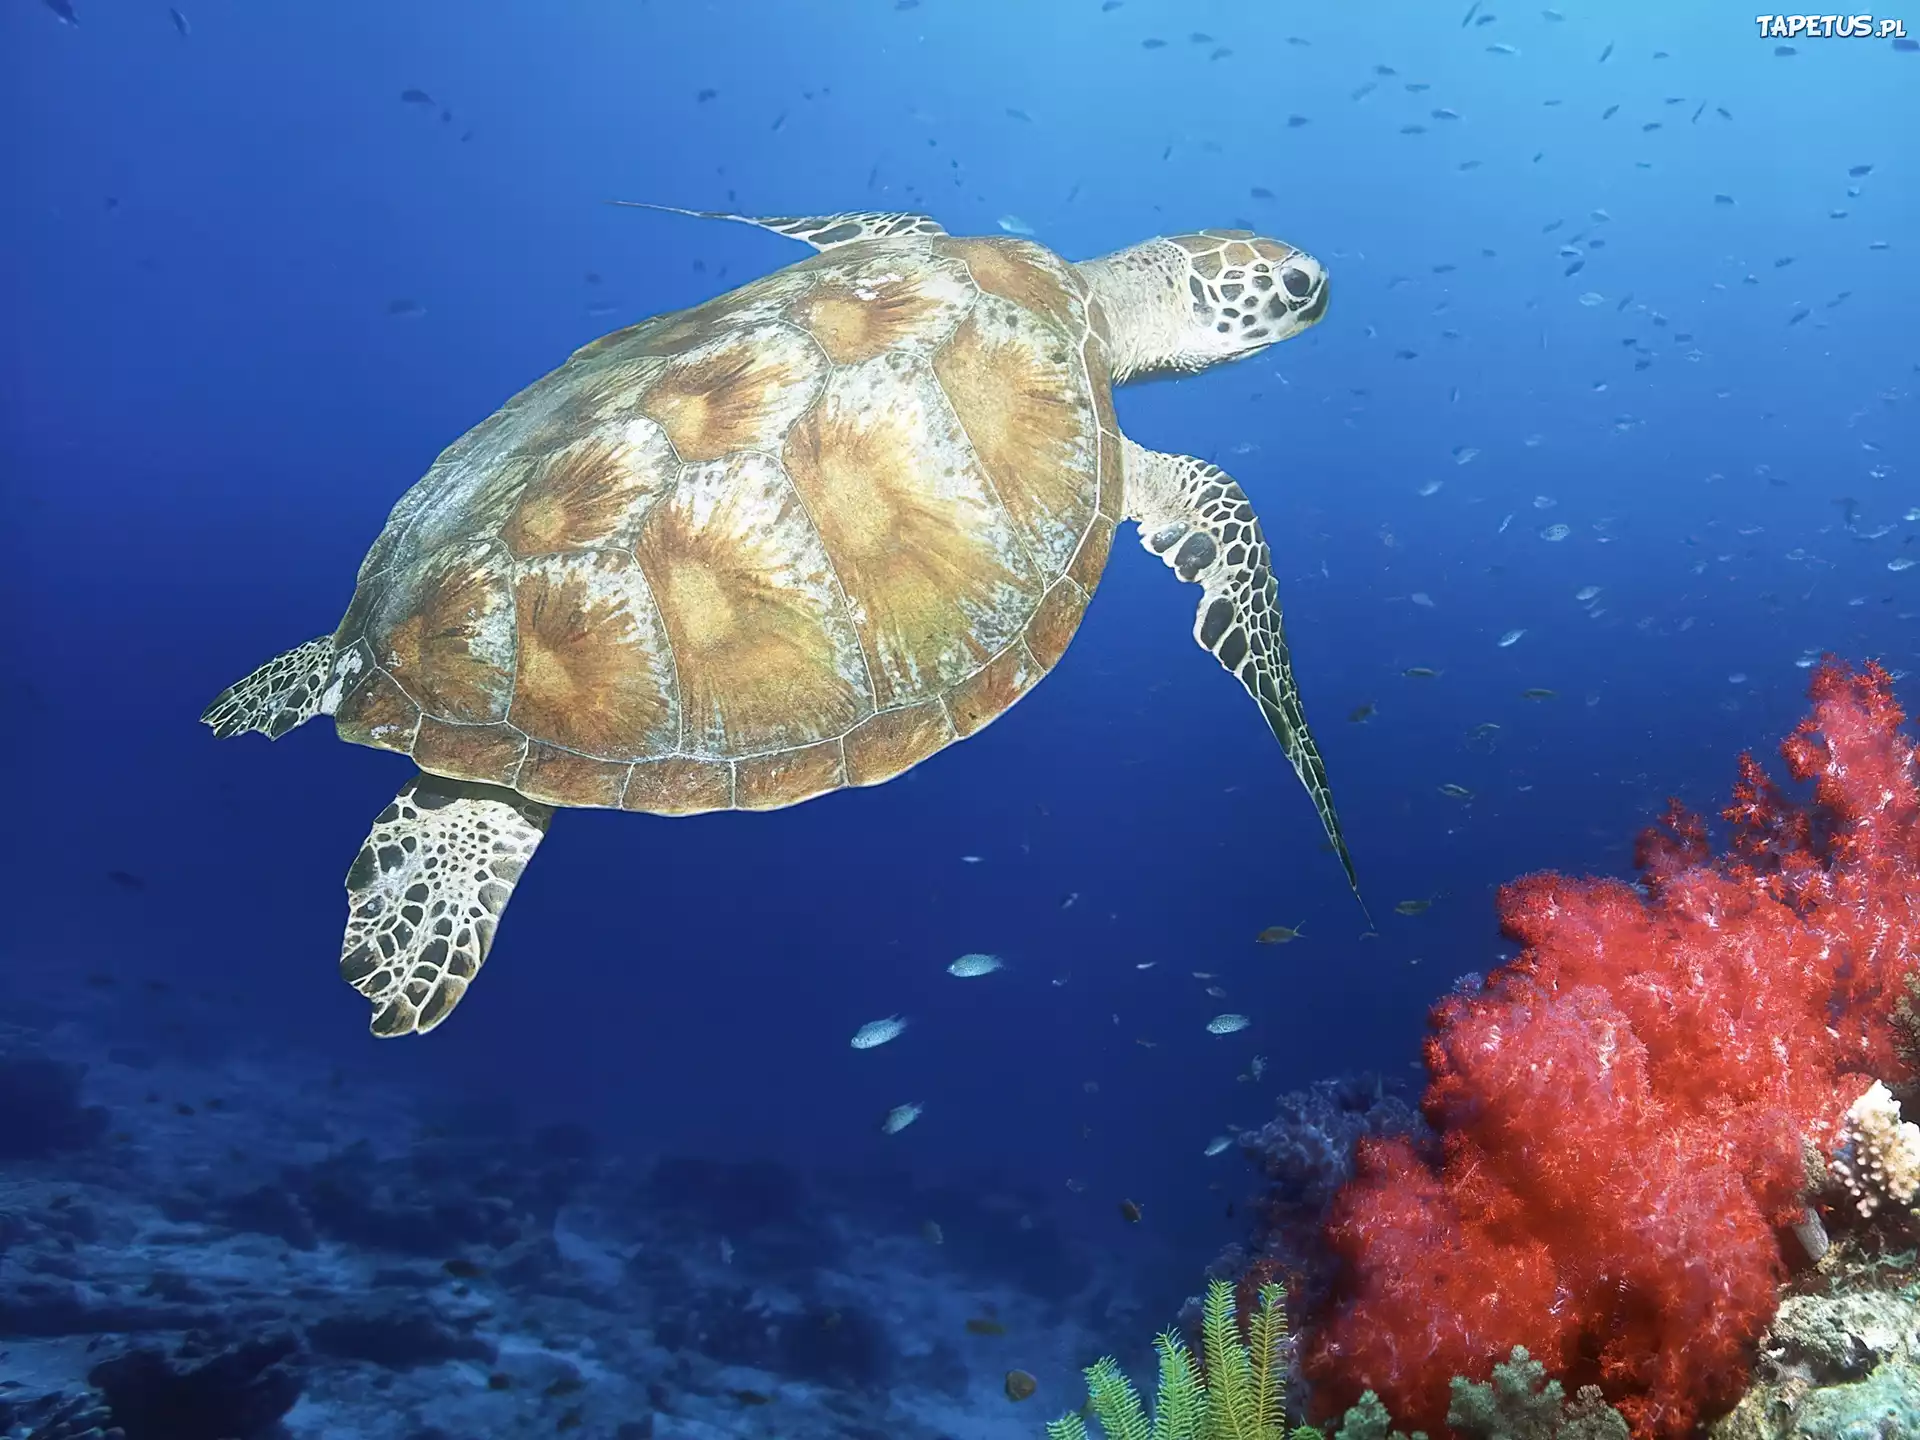 Картинка морская черепаха. Черепаха бисса (Каретта). Черноморские черепахи морские. Черепаха океаническая. Морская черепаха и Черепашата.